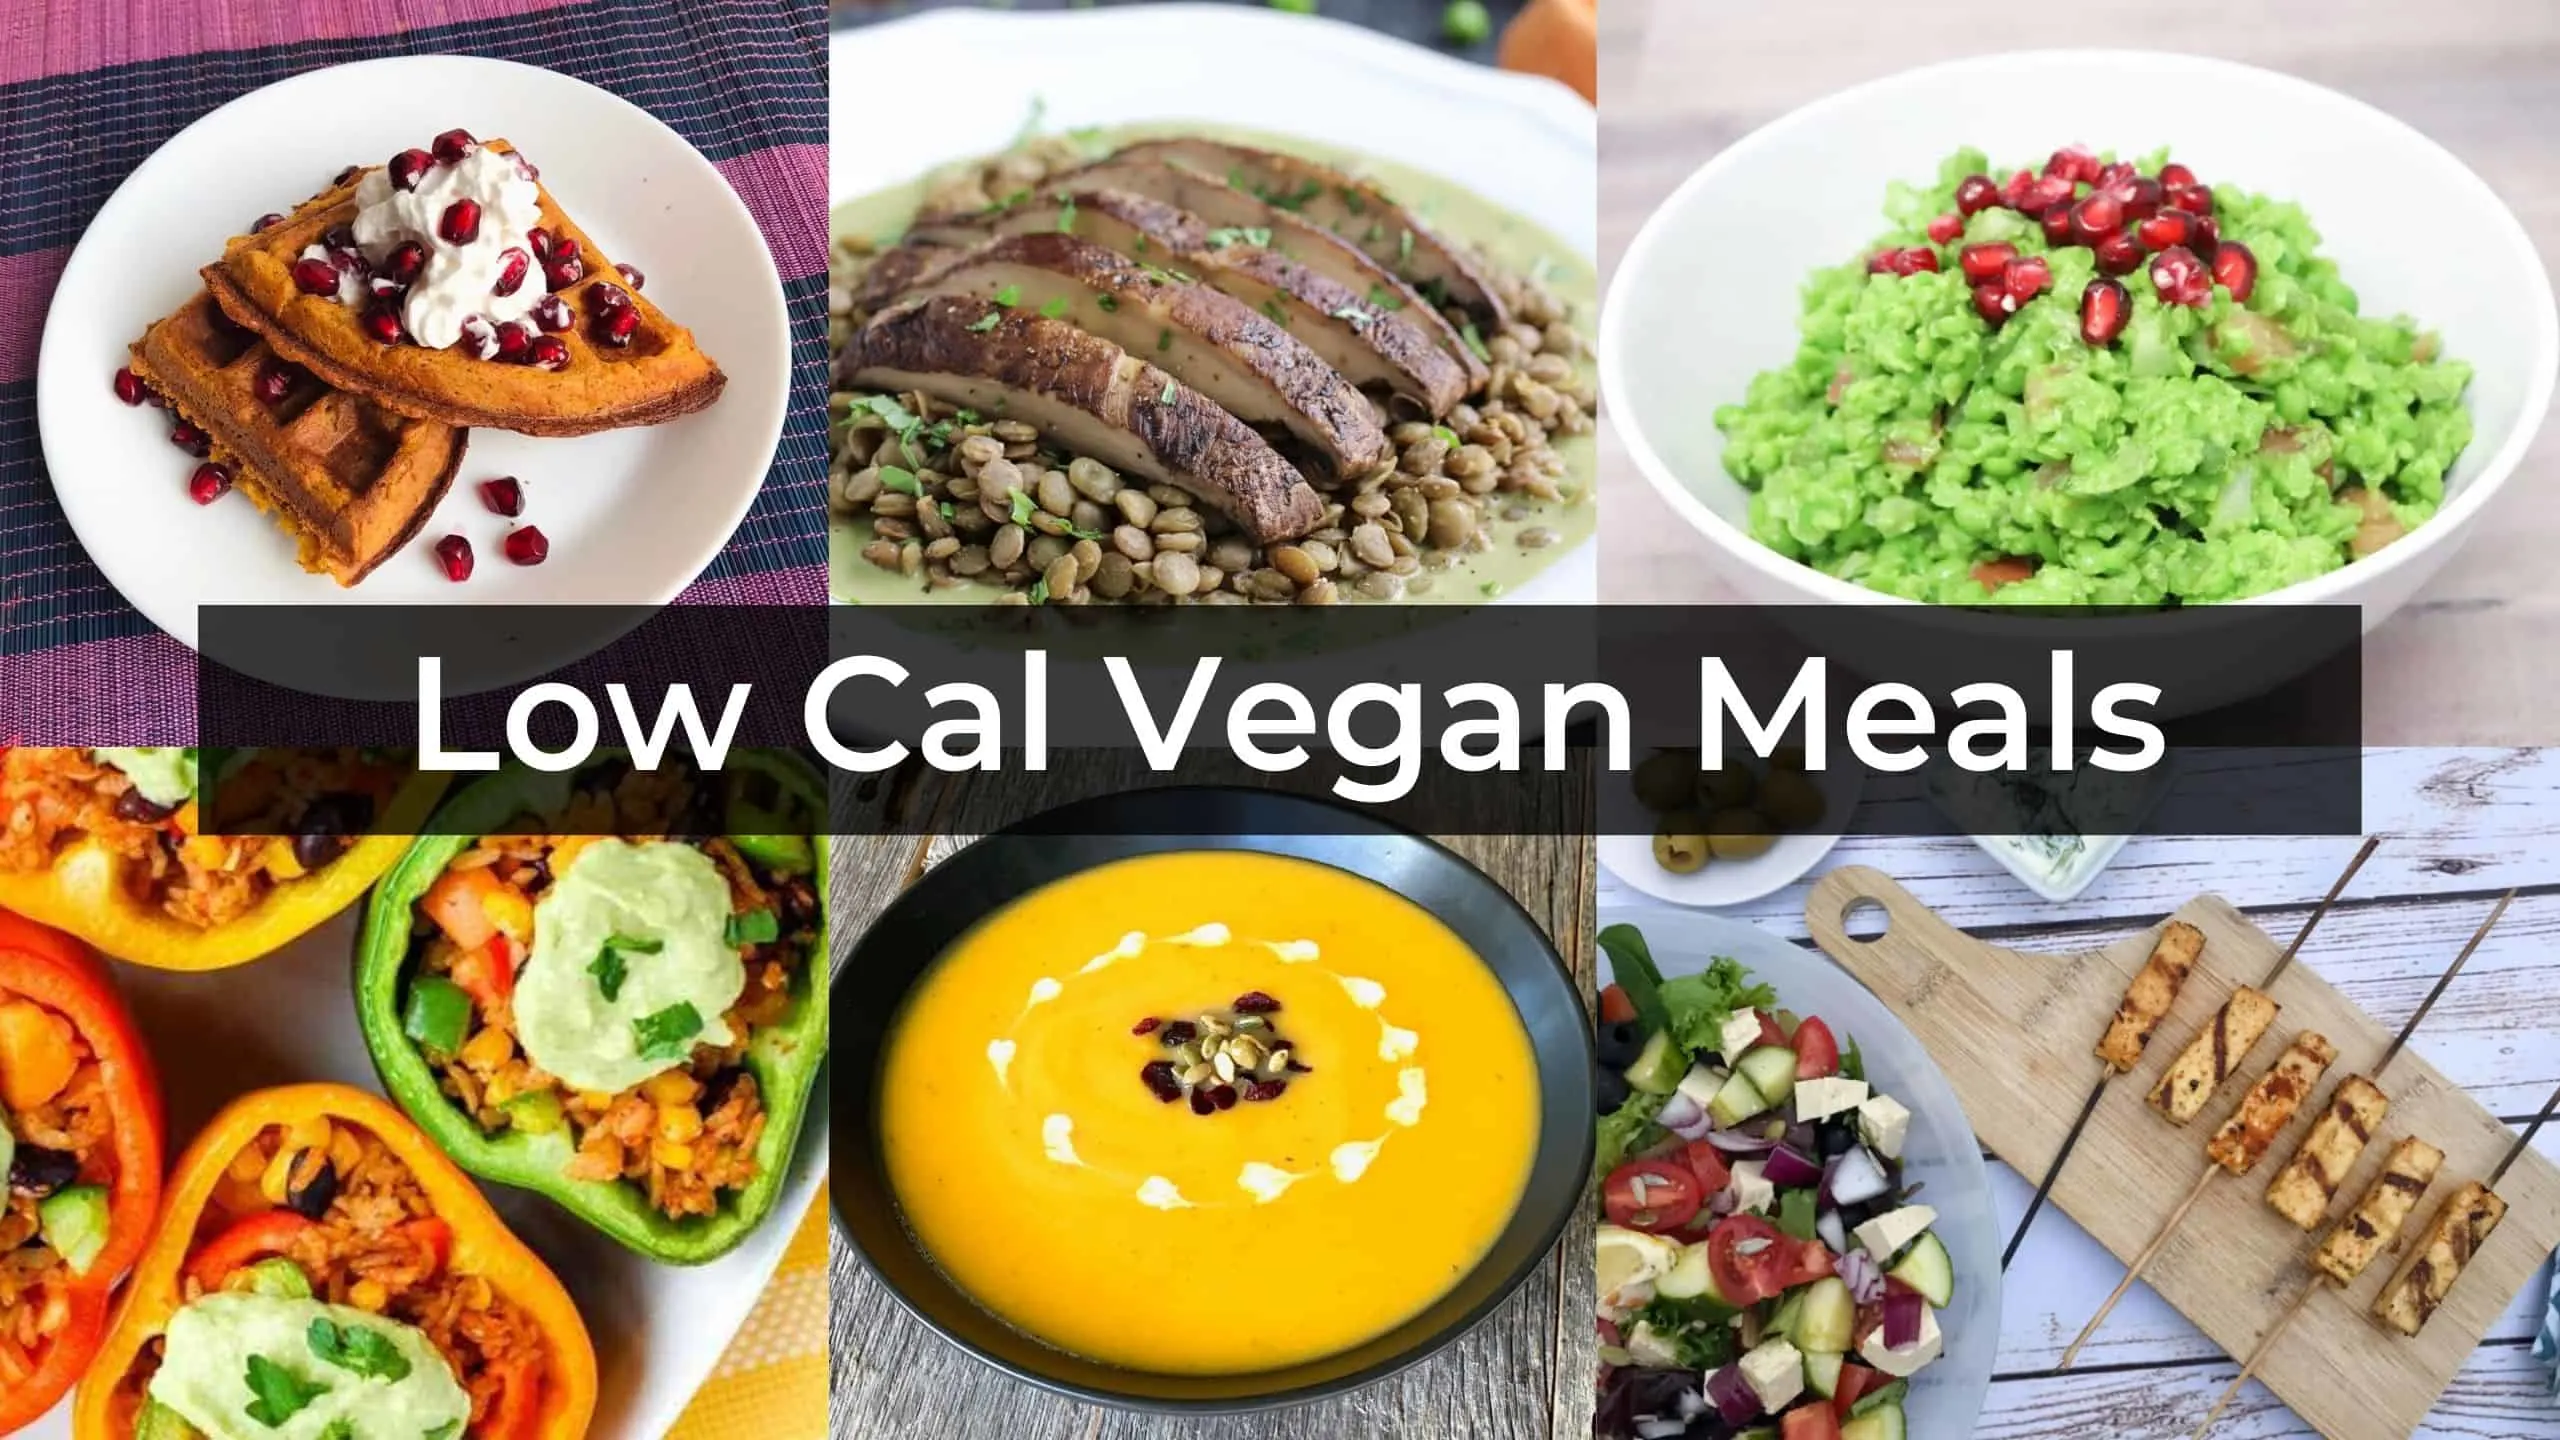 https://yumveganlunchideas.com/wp-content/uploads/2020/01/Low-Cal-Vegan-Recipes.jpg.webp